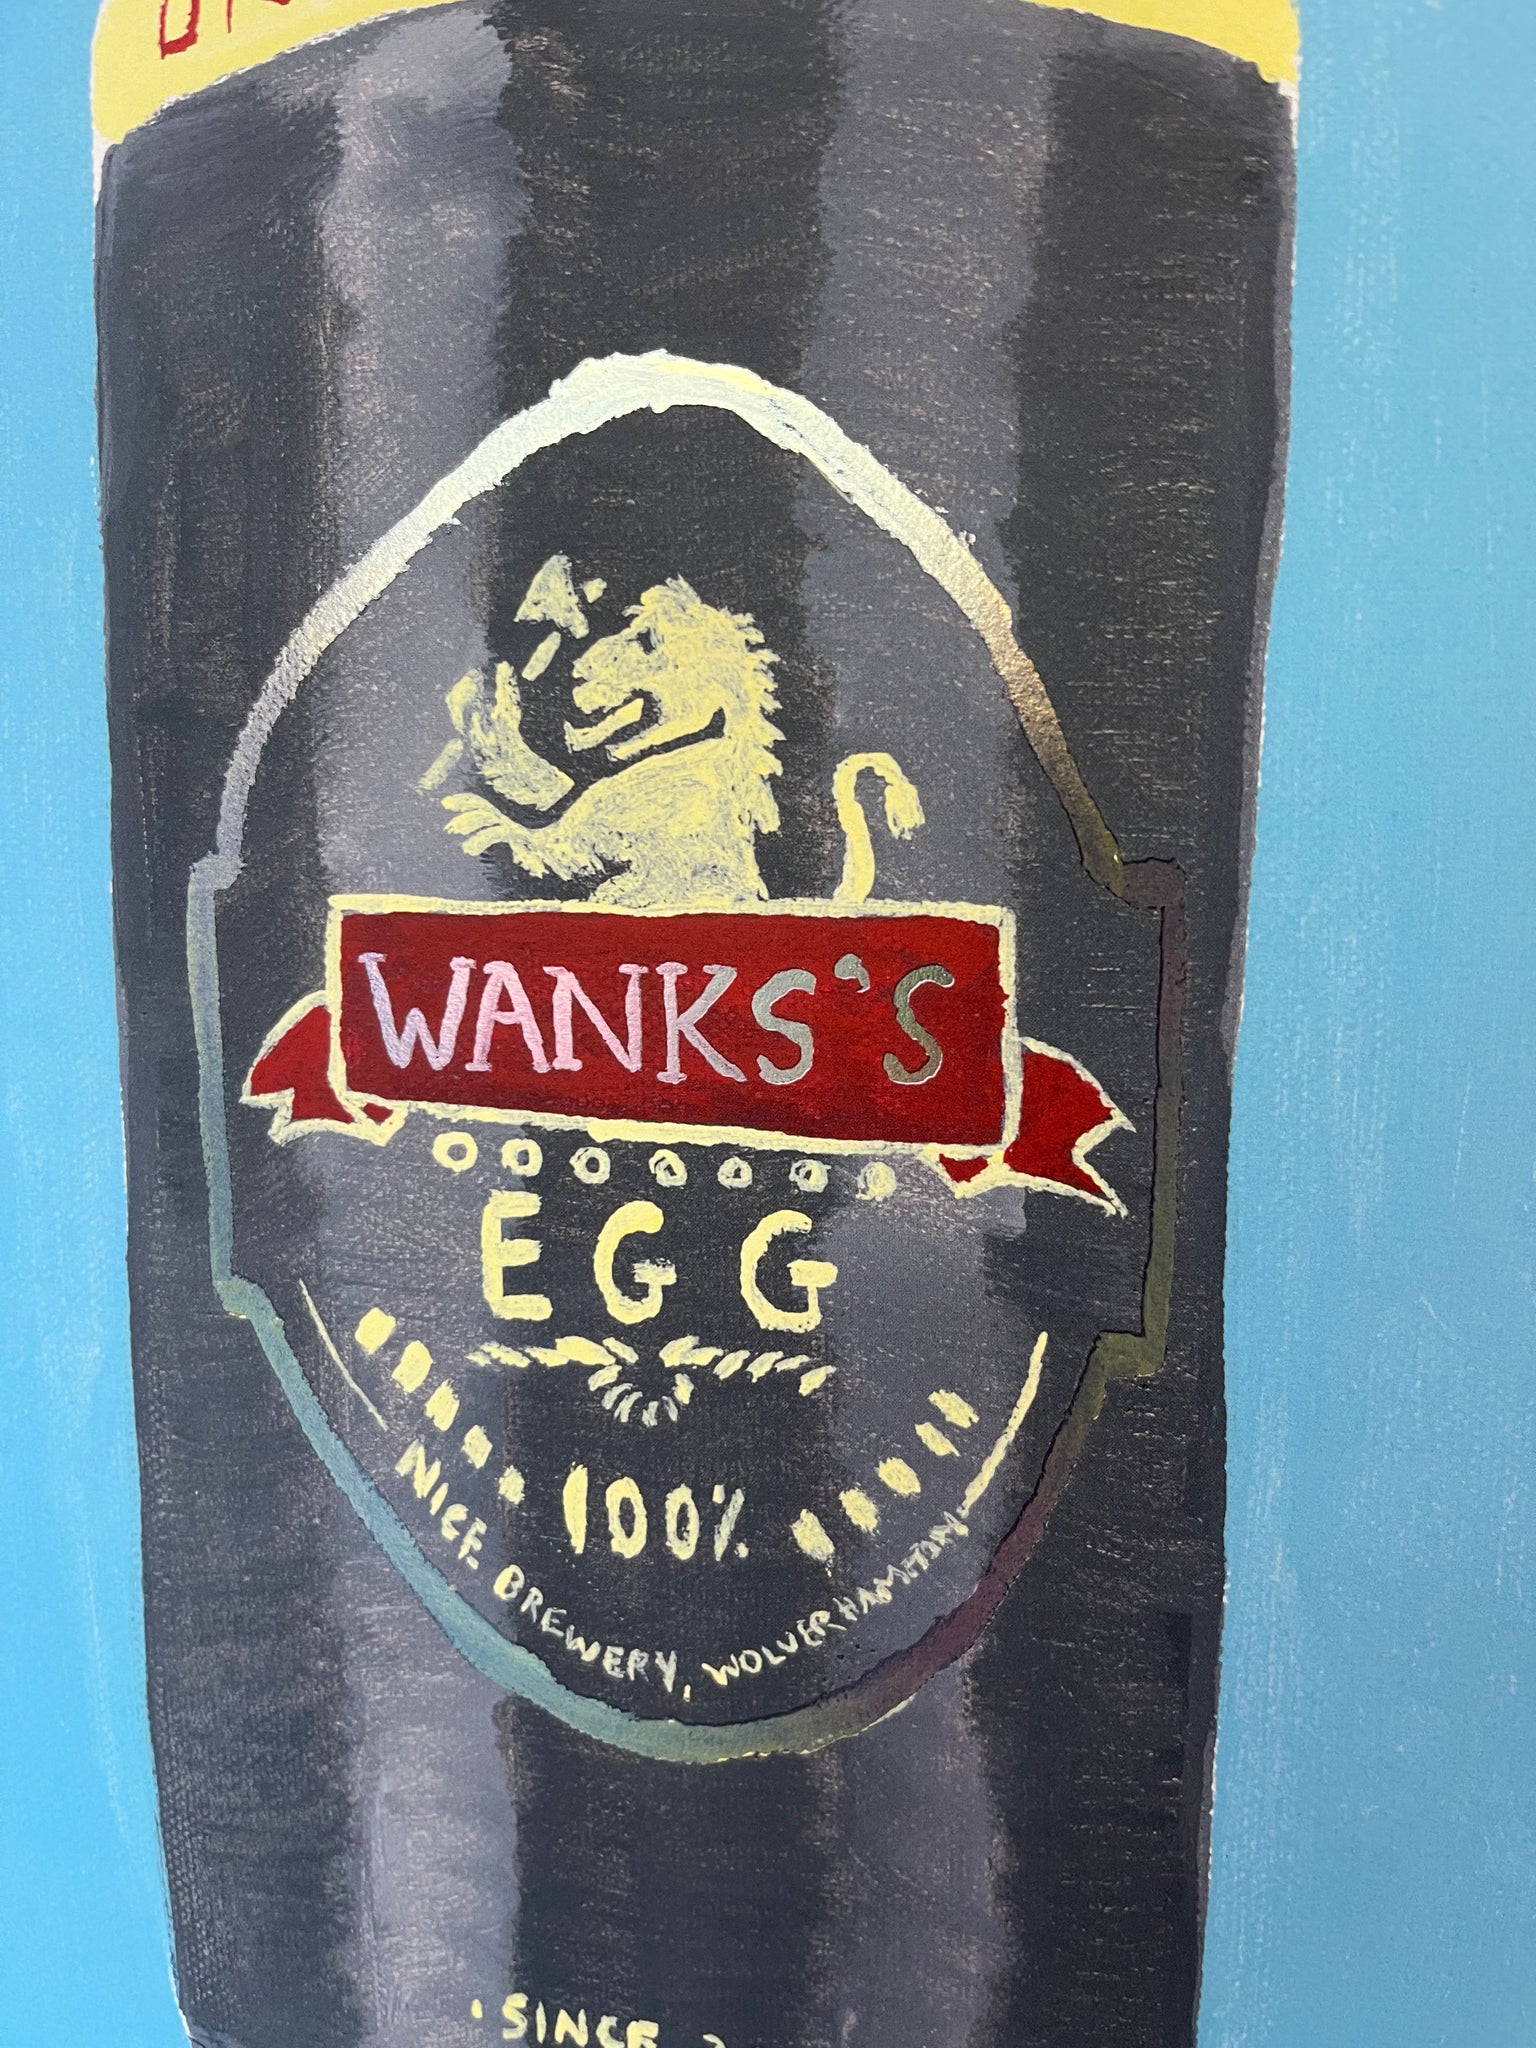 Wanks's